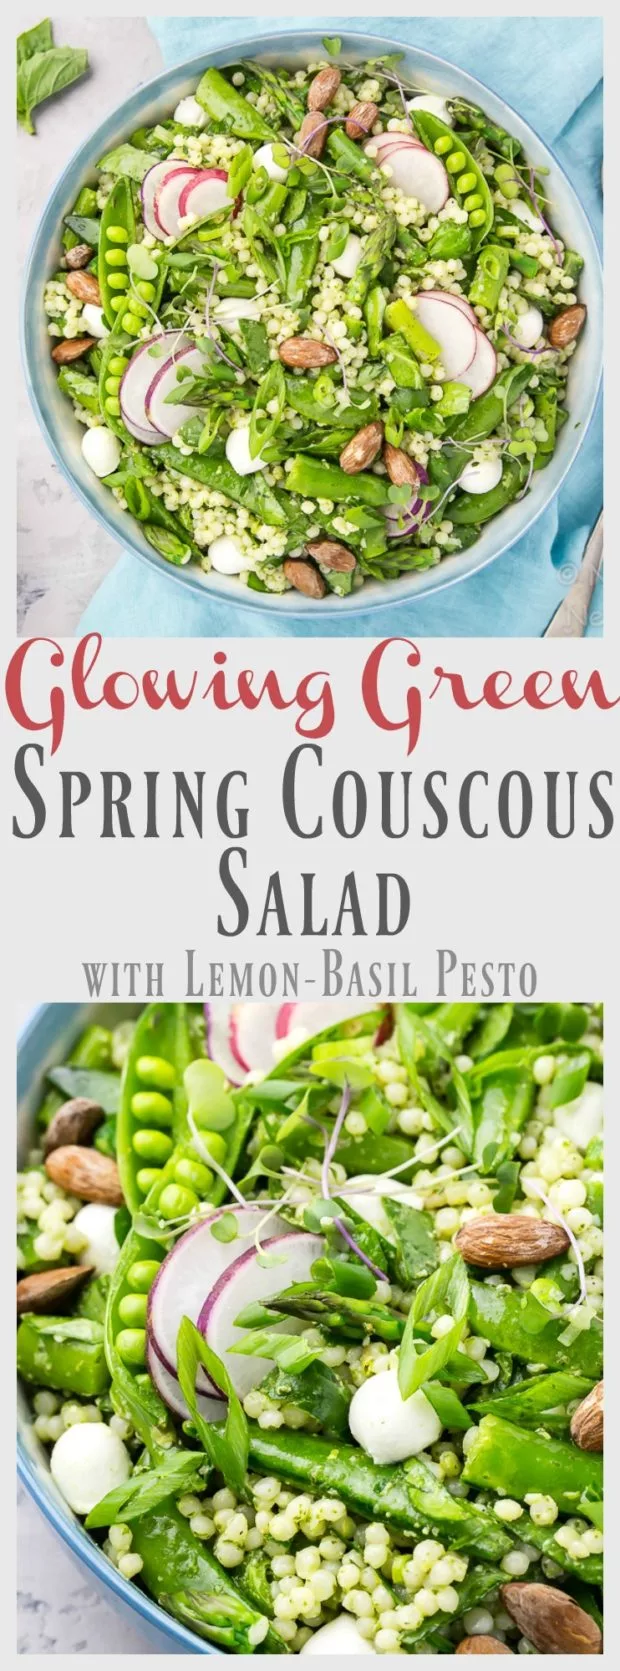 Glowing Green Spring Couscous Salad with Lemon Basil Pesto